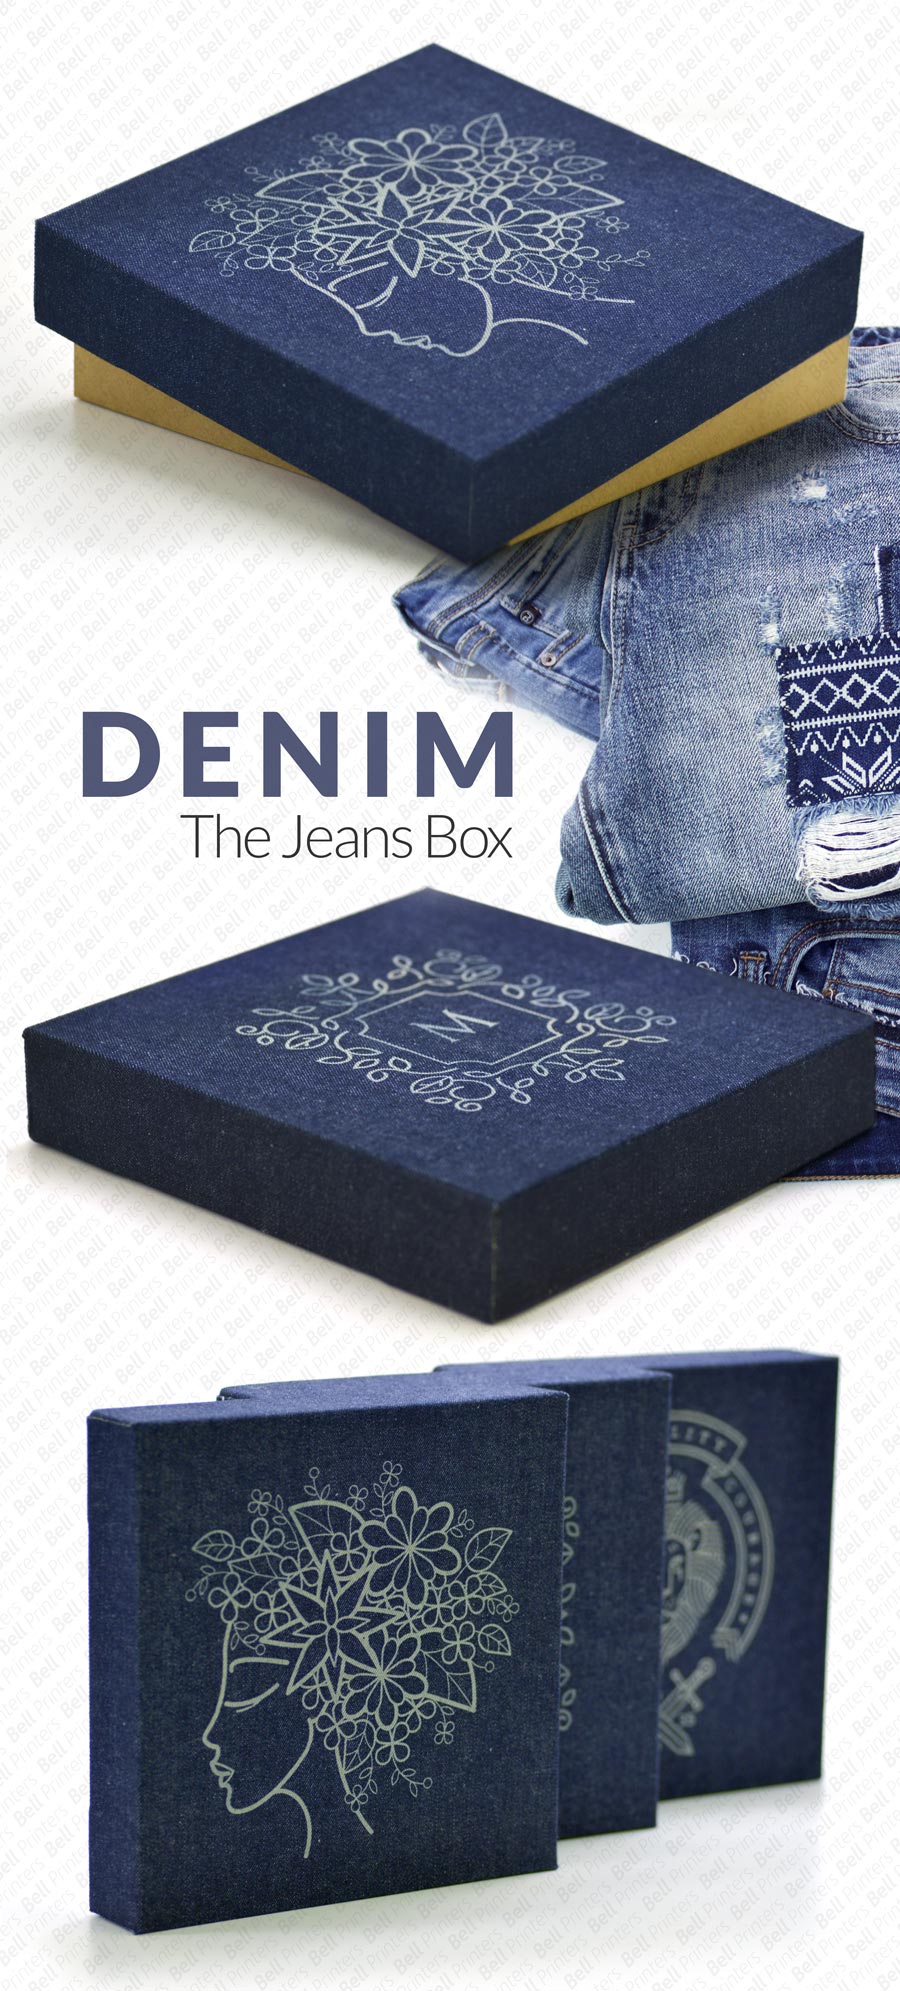 Jeans & Denim logo engraved rigid box innovative packaging